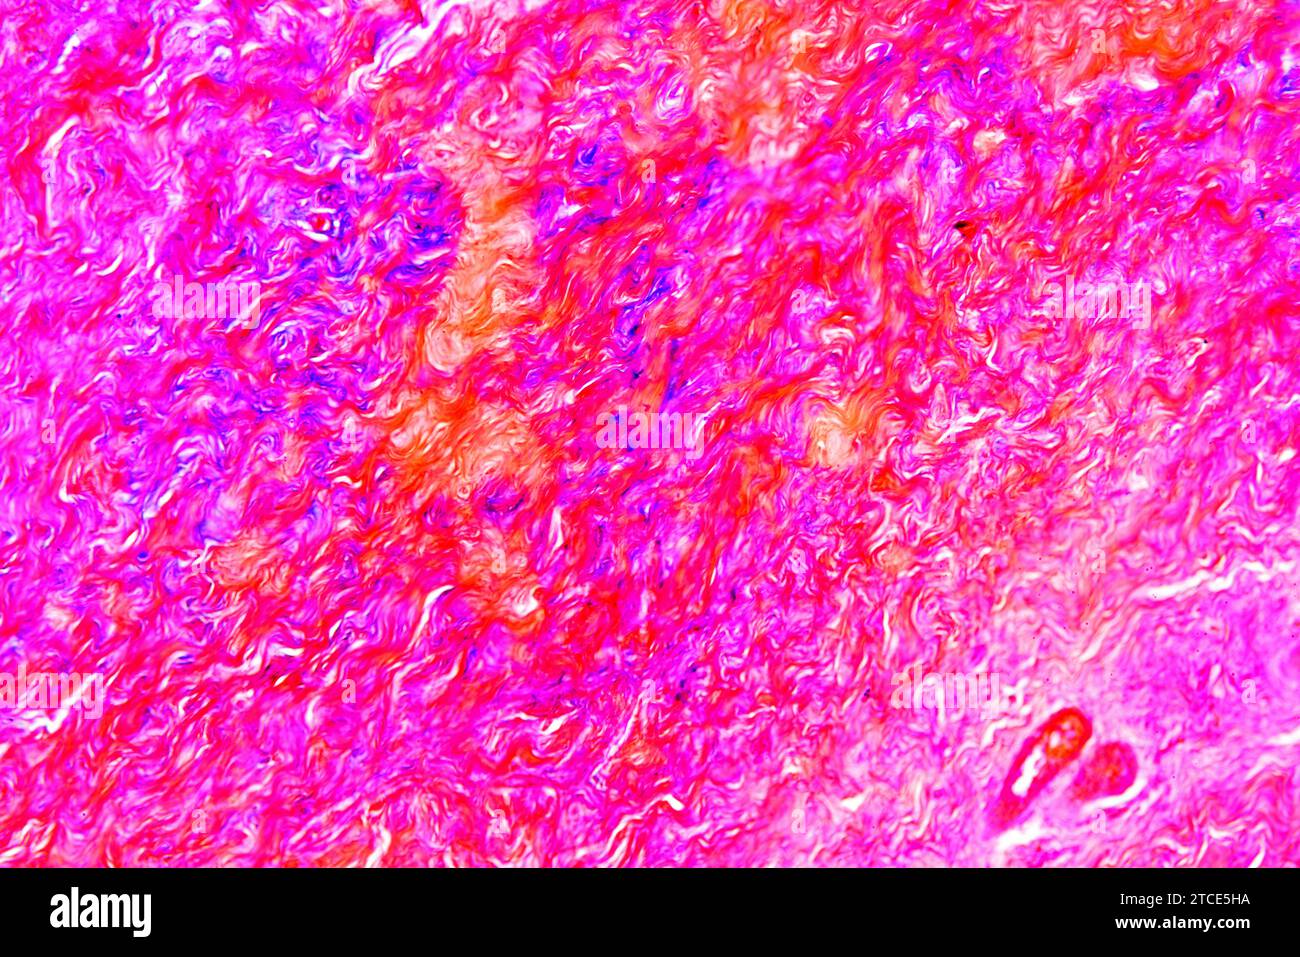 Tissu de fibrocartilage montrant des fibres de collagène. Microscope optique X100. Banque D'Images